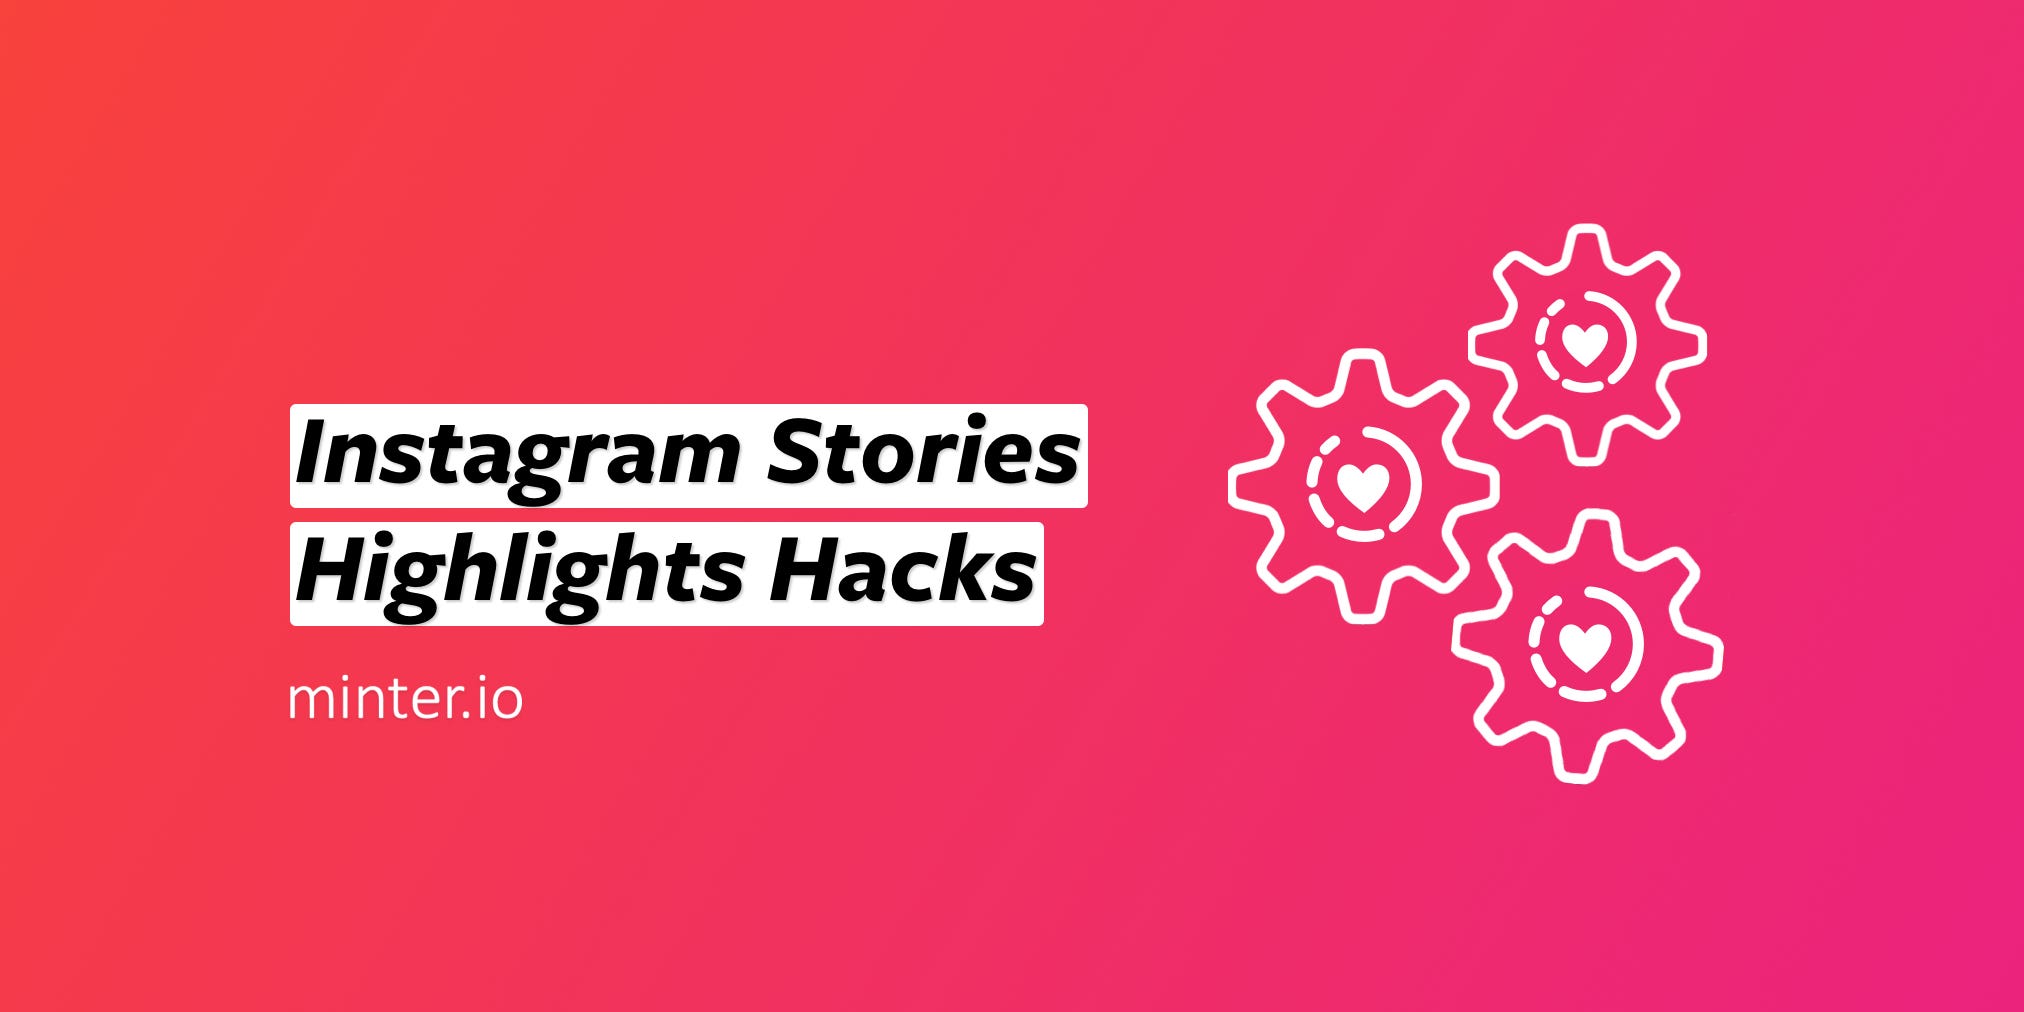 Instagram Stories Highlights Hacks - Minter.io: Instagram Analytics - Medium